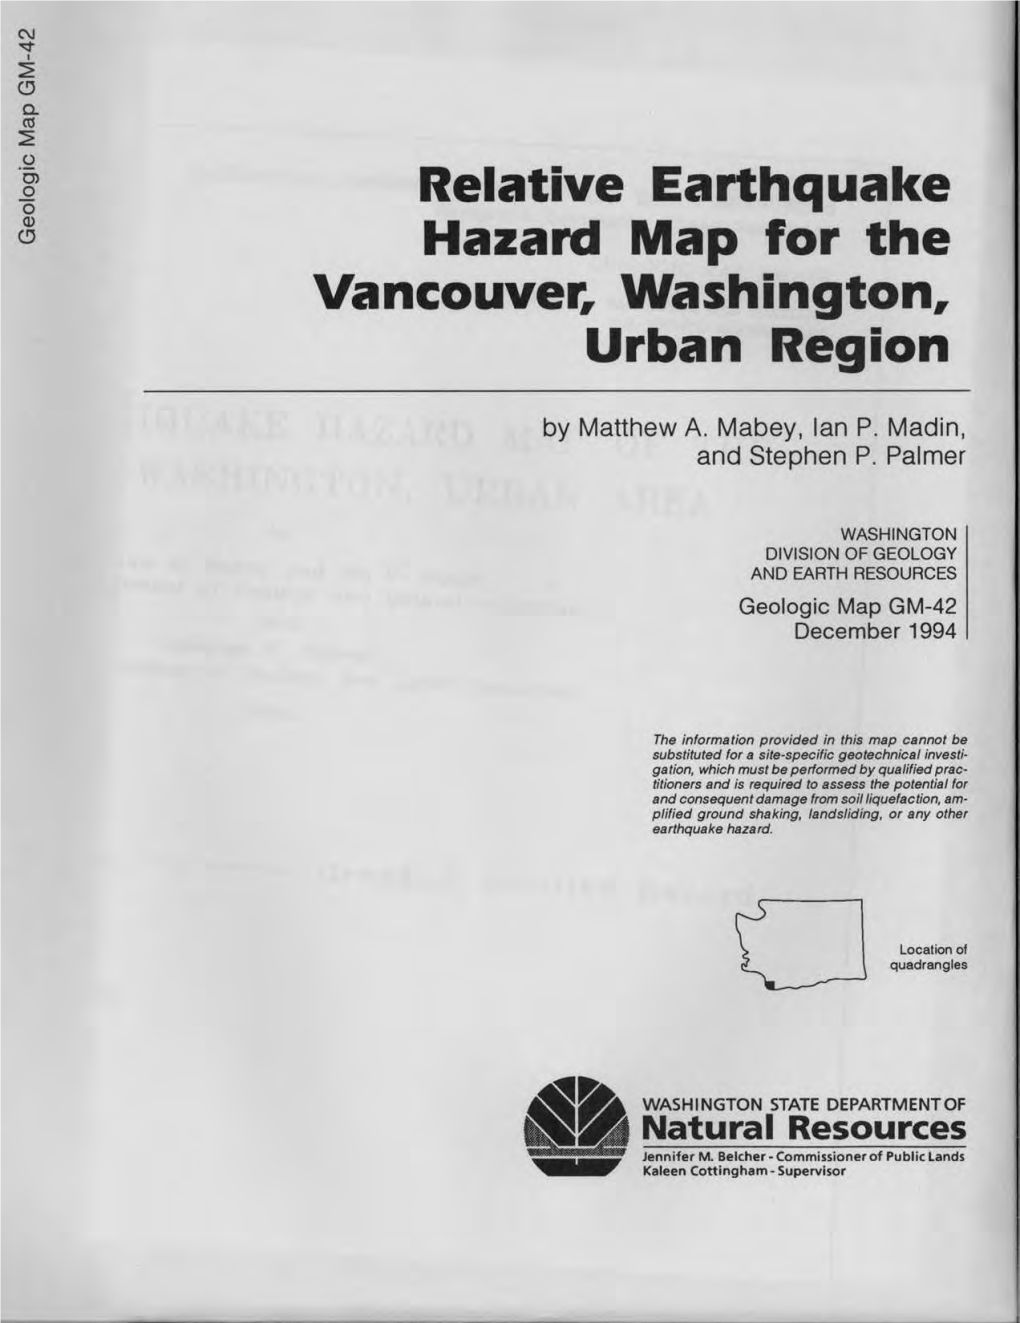 Relative Earthquake Hazard Map for the Vancouver, Washington, Urban Region